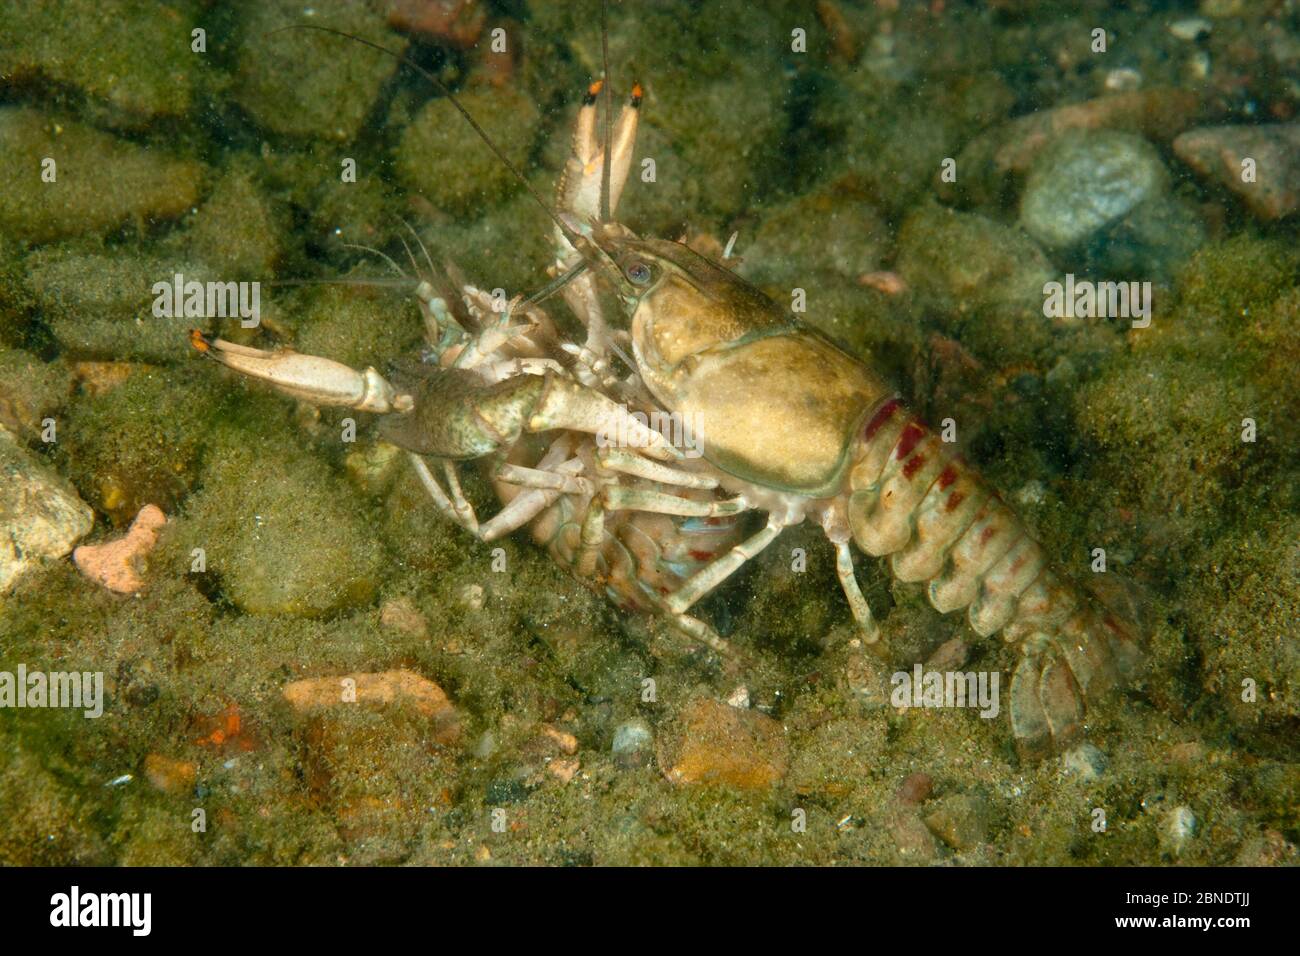 North American crayfish (Orconectes limosus) pair mating, Lake Lugano, Ticino, Switzerland Stock Photo